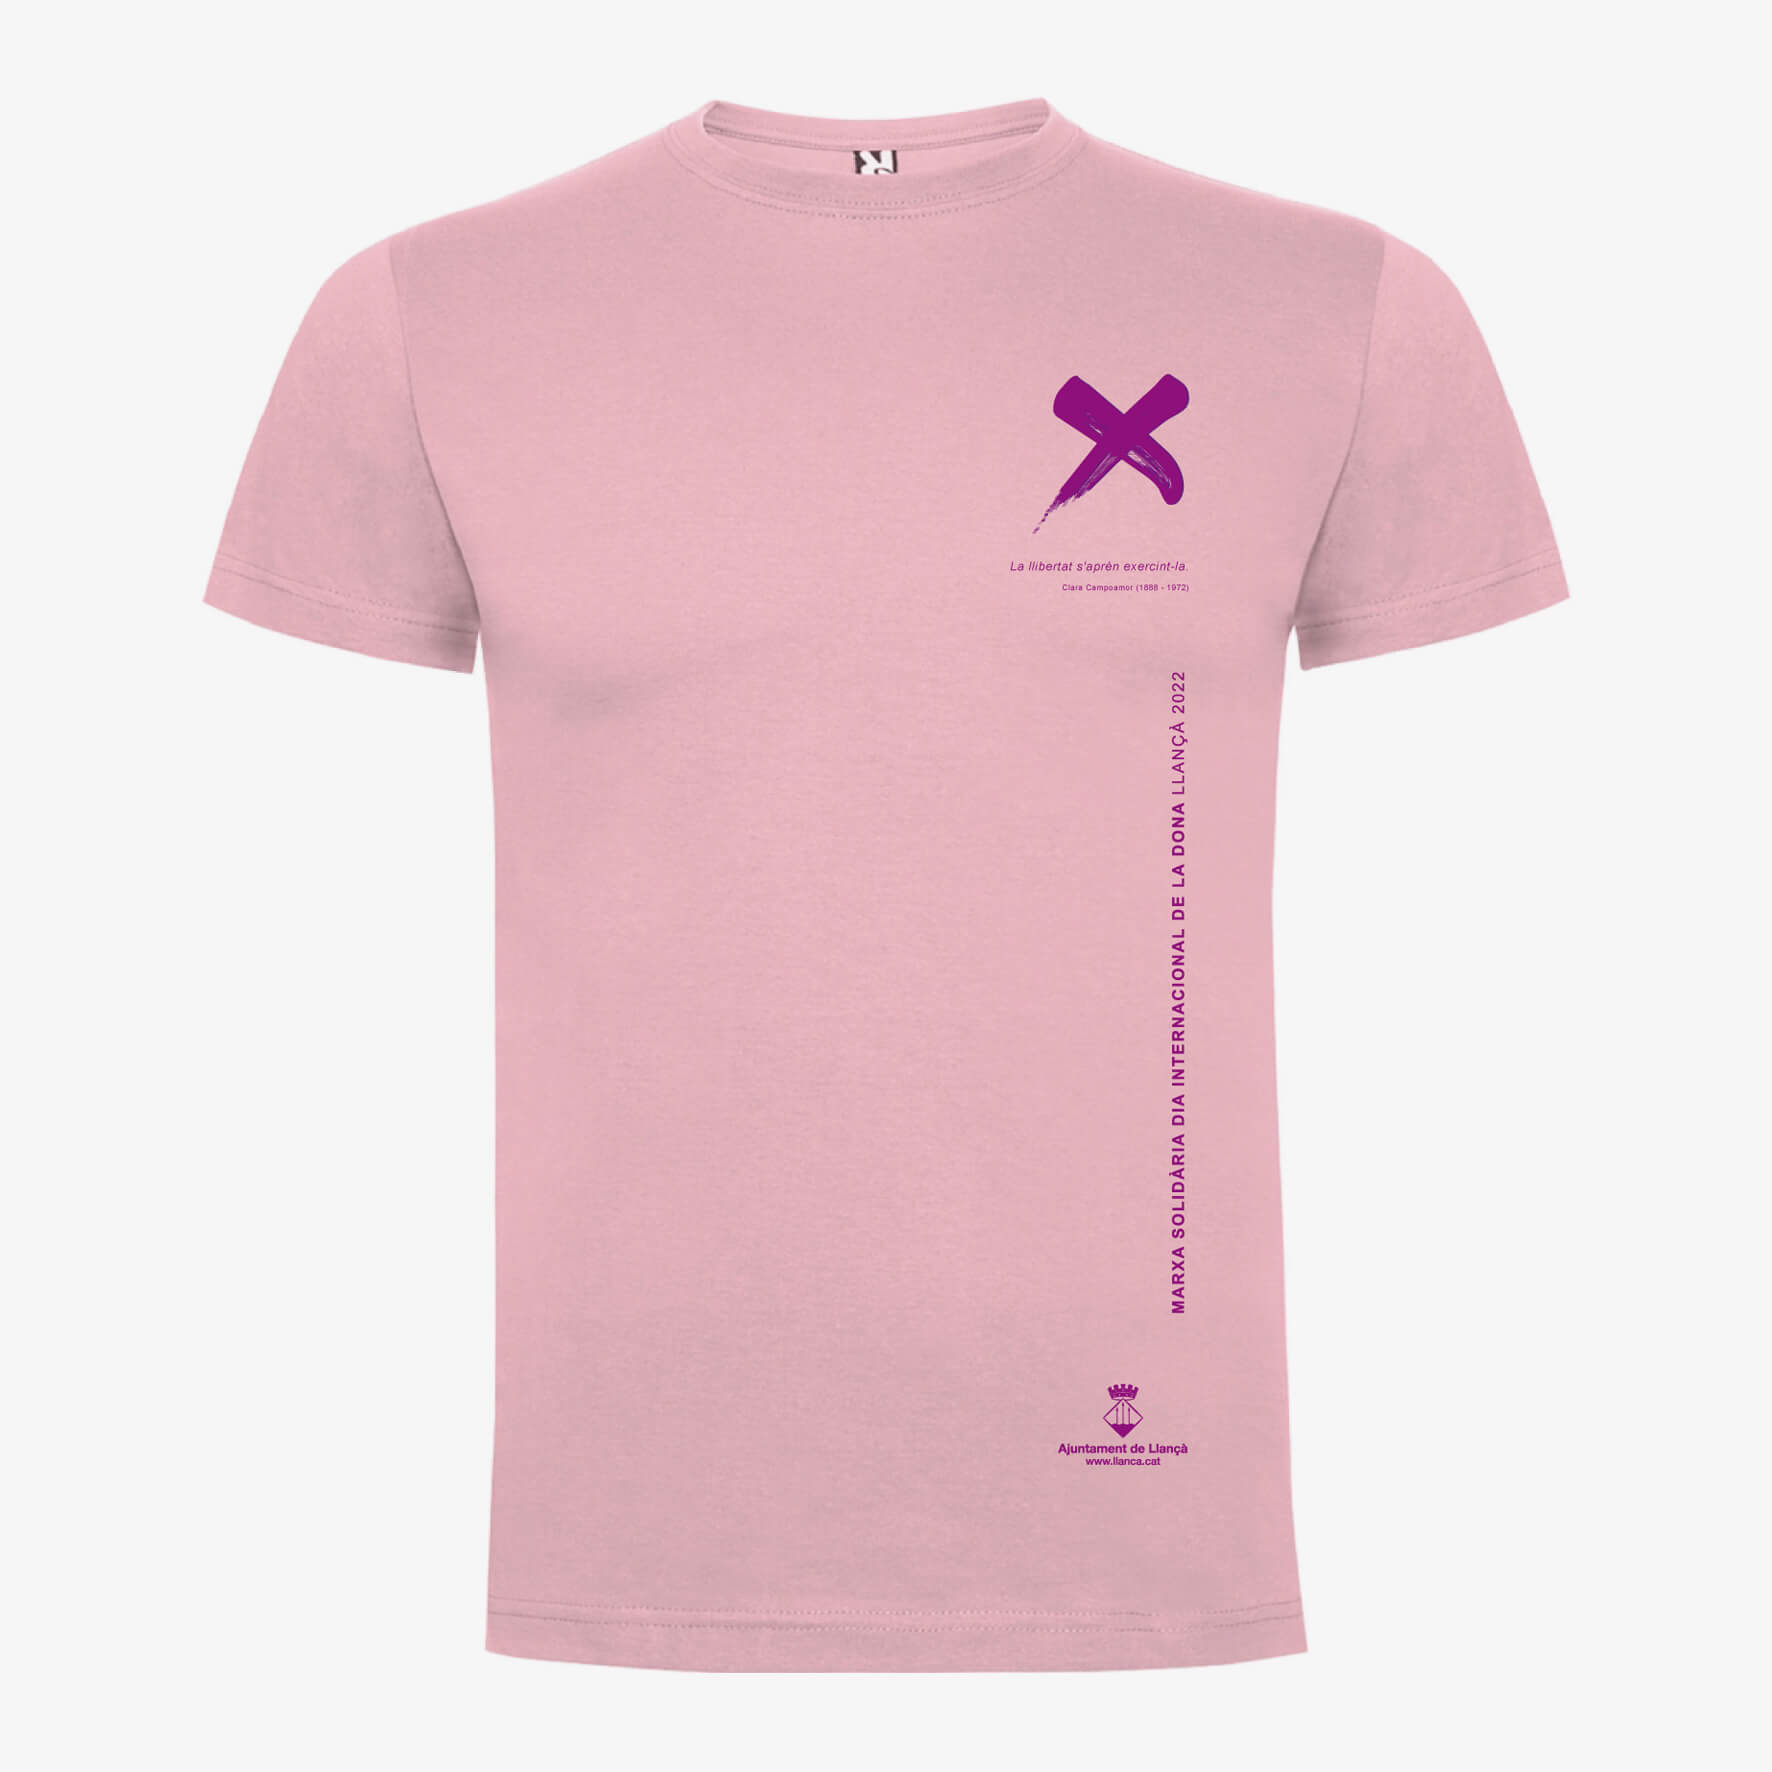 Diseño Camiseta Marcha Solidaria Día de la Mujer Llançà